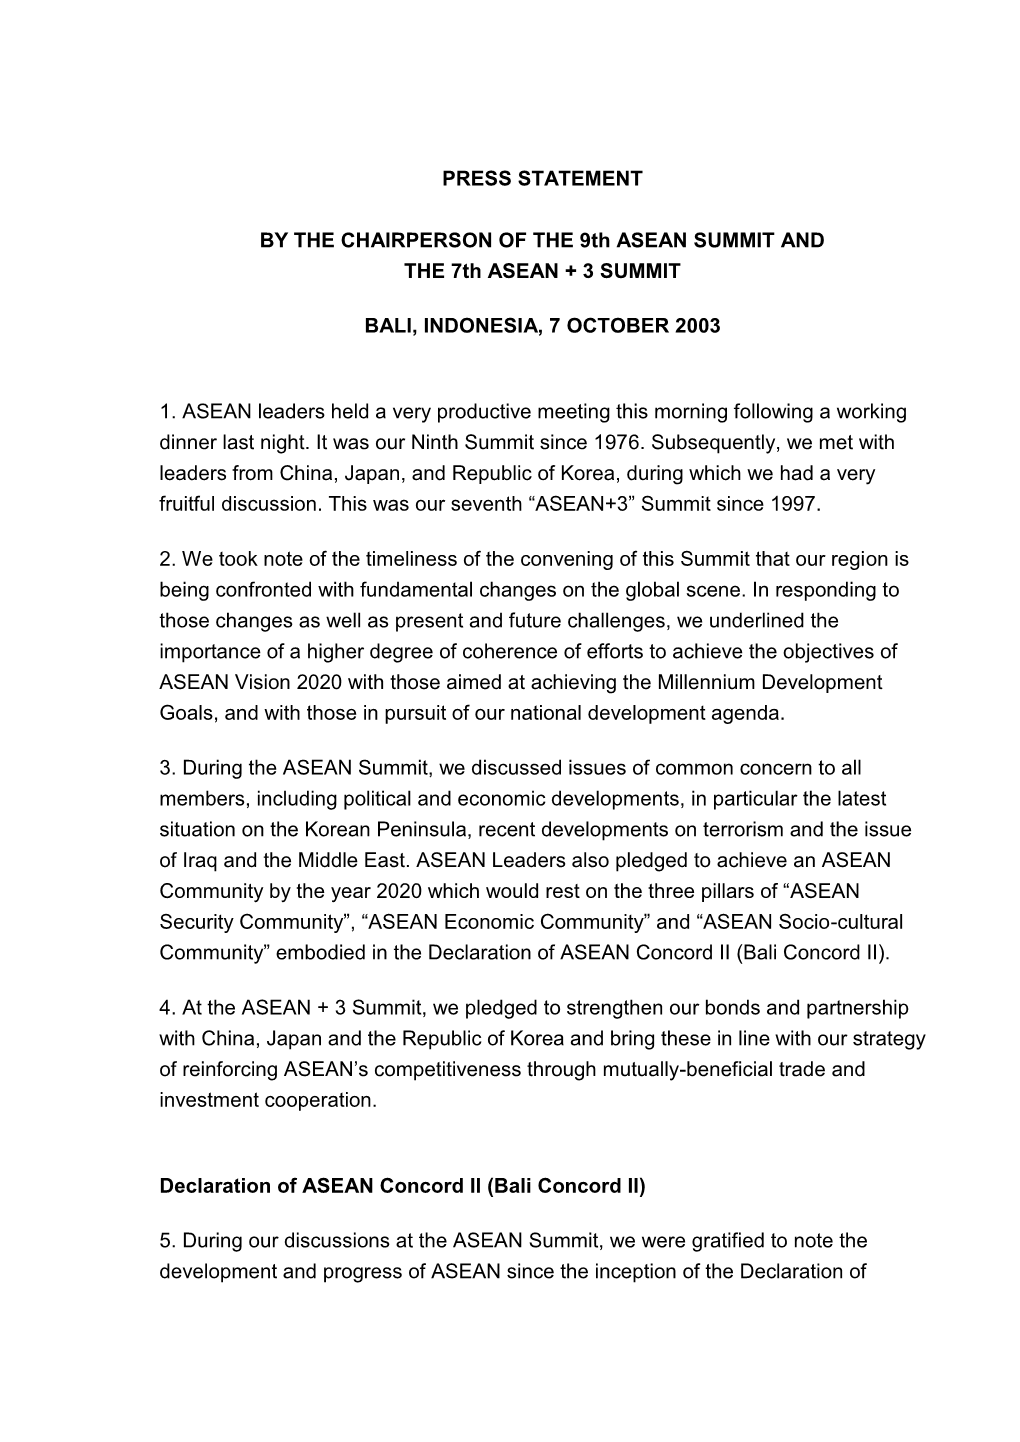 Declaration of ASEAN Concord II (Bali Concord II)